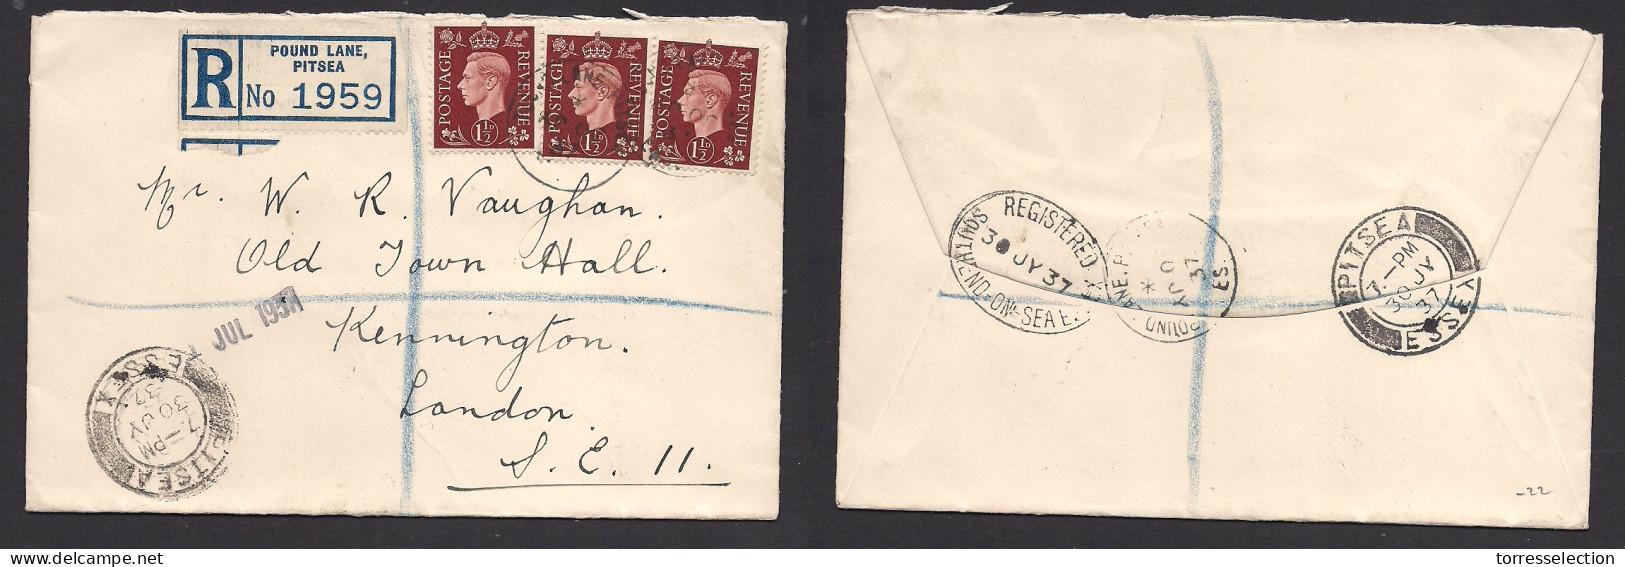 Great Britain - XX. 1937 (30 July) Pound Lane, Pitsea - London. Multifkd Registered Envelope 1 182d (x3) XSALE. - ...-1840 Prephilately